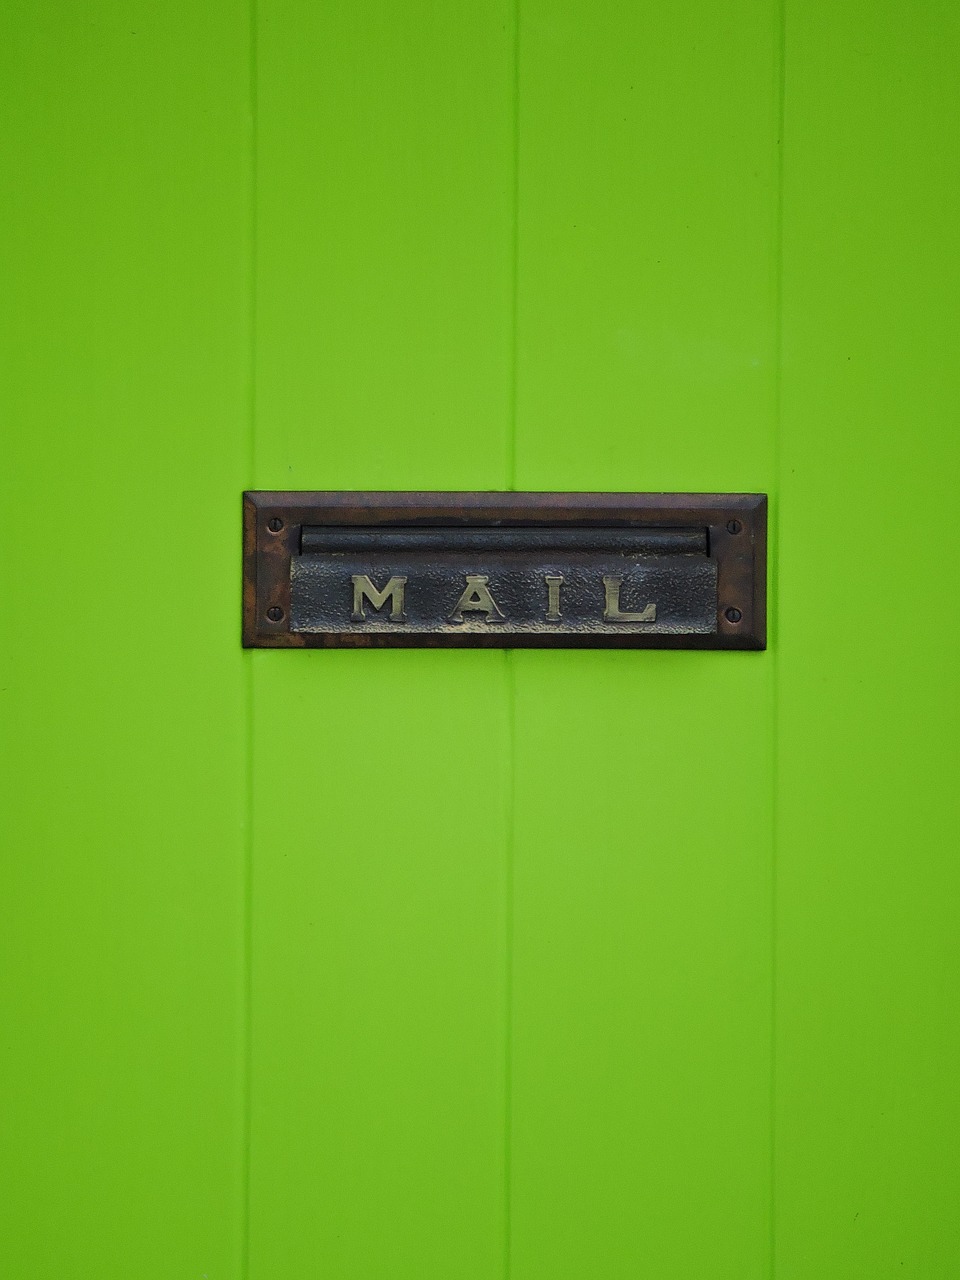 Door,mail slot,mail,brass,slot - free image from needpix.com